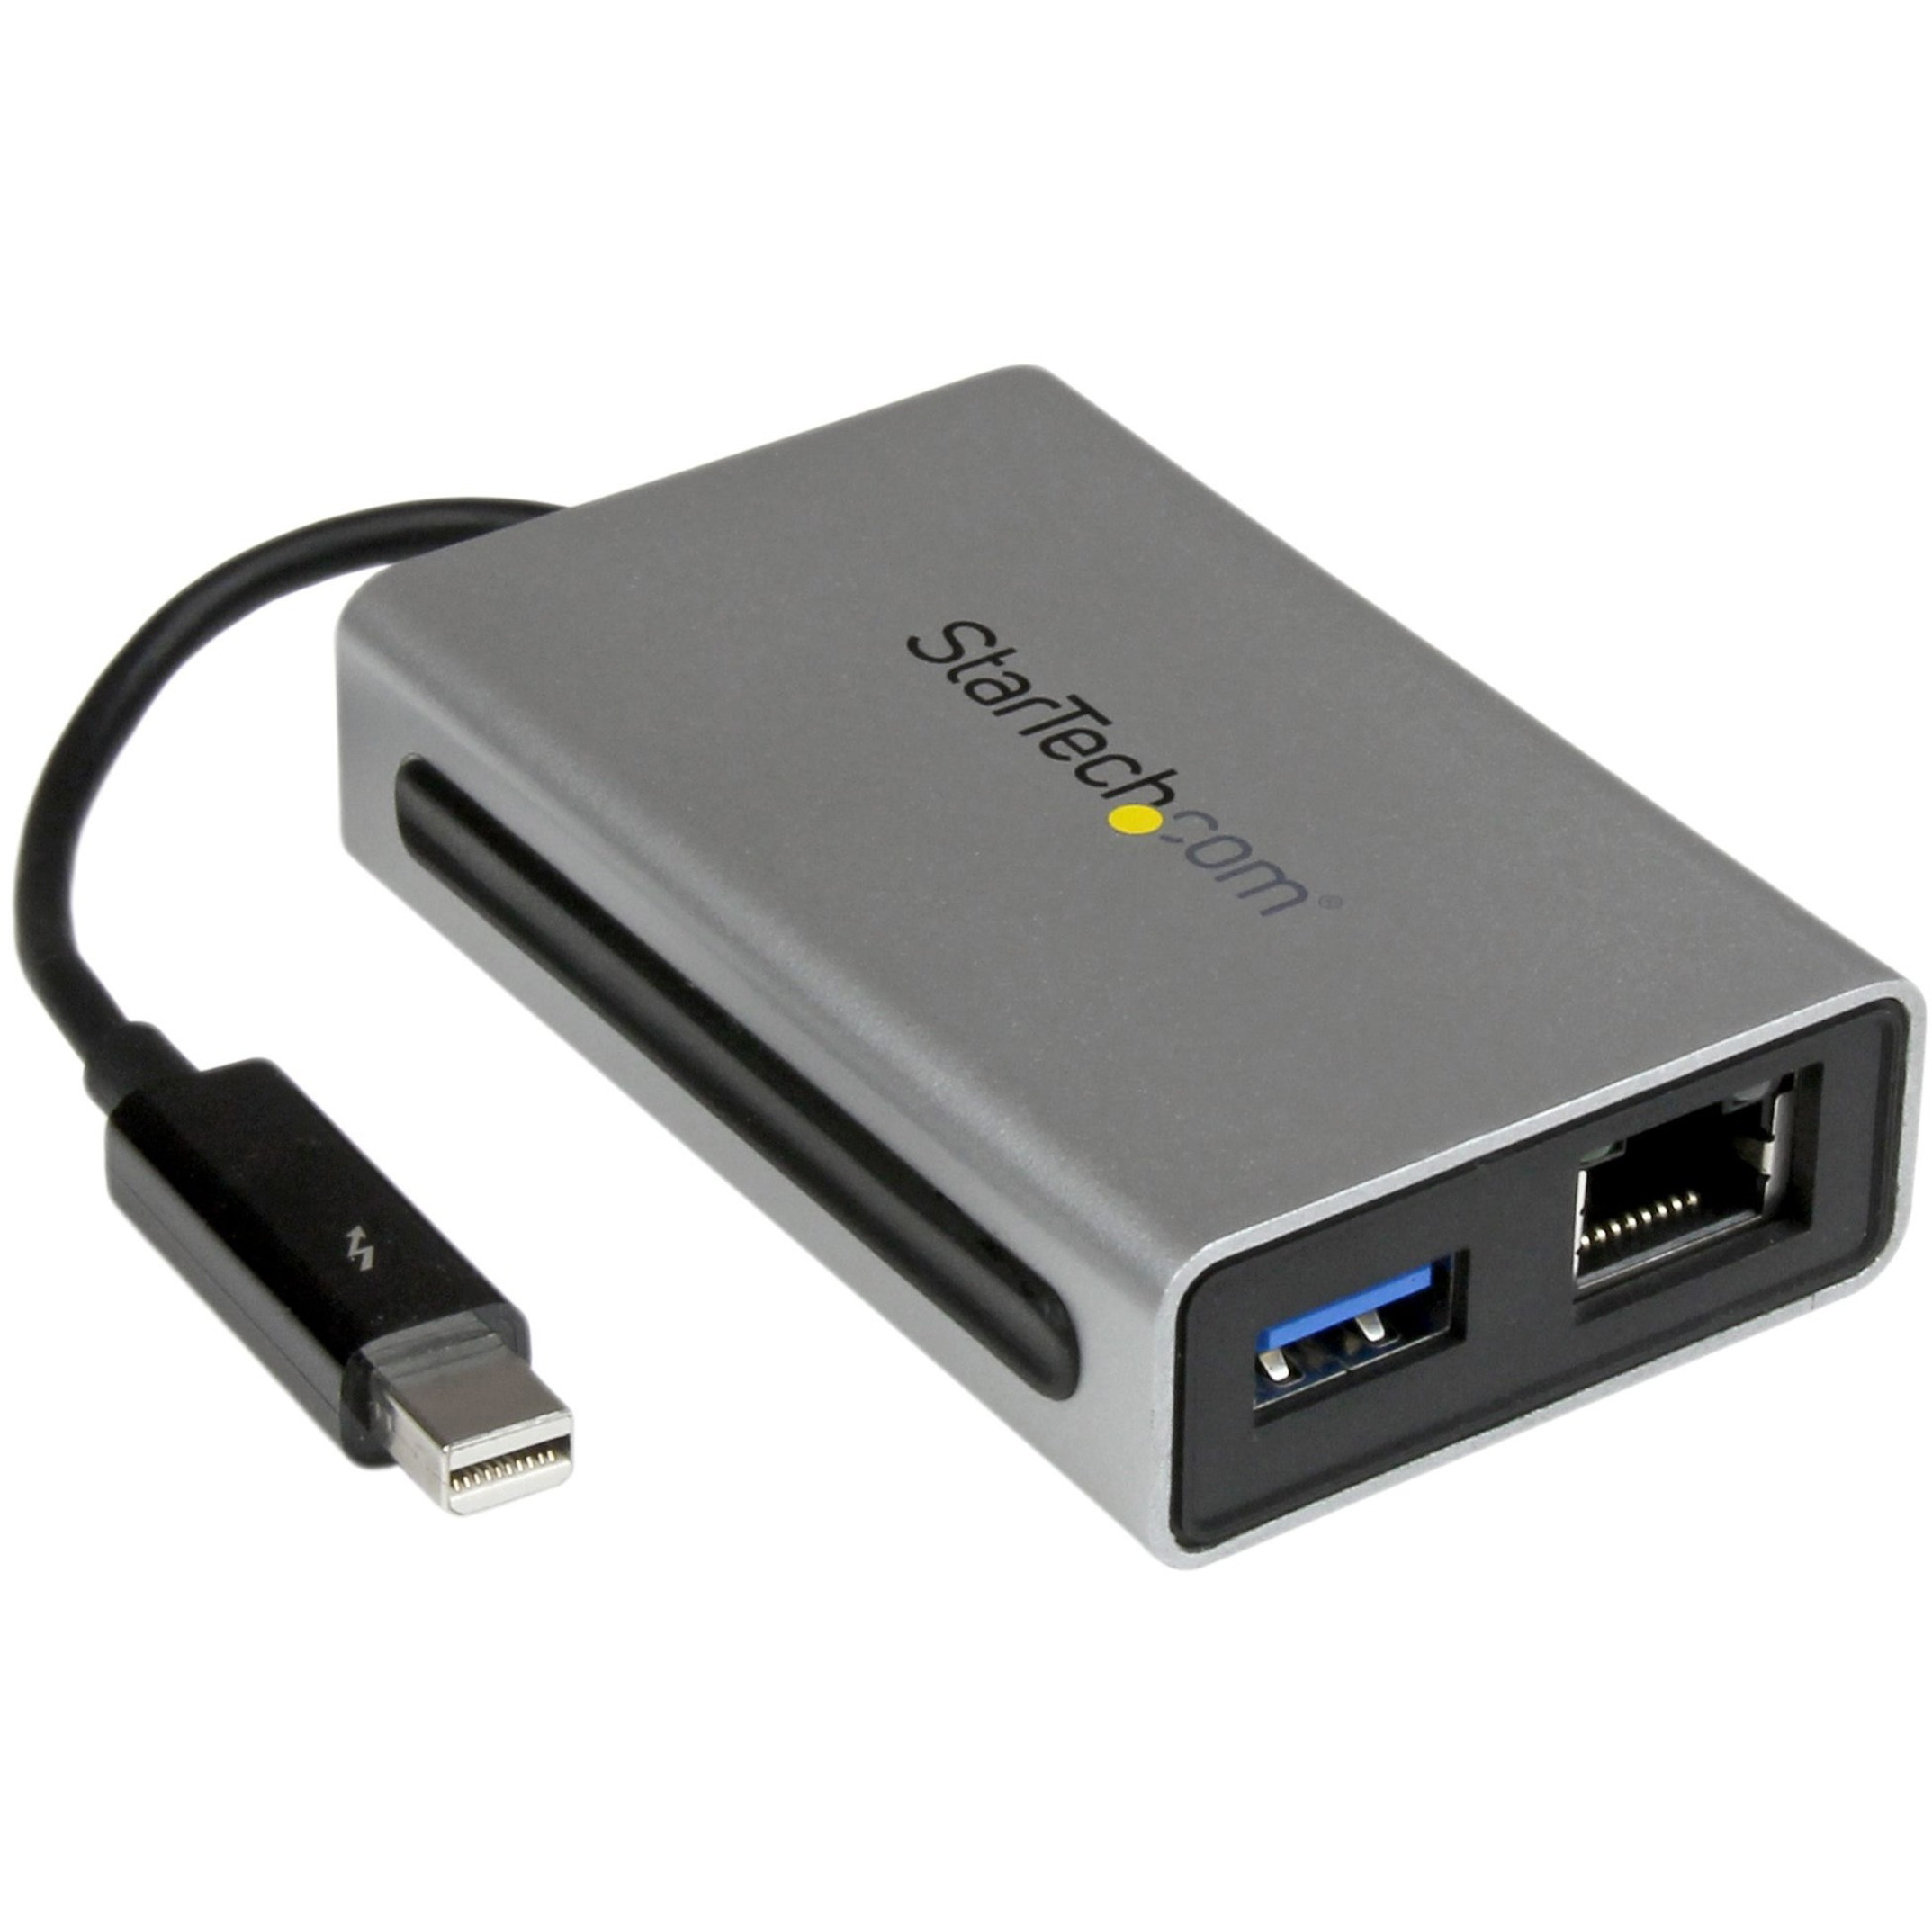 Startech .com Thunderbolt to Gigabit plus USB 3.0Thunderbolt a Gigabit Ethernet port and a USB 3.0 hub port to your T... TB2USB3GE Corporate Armor